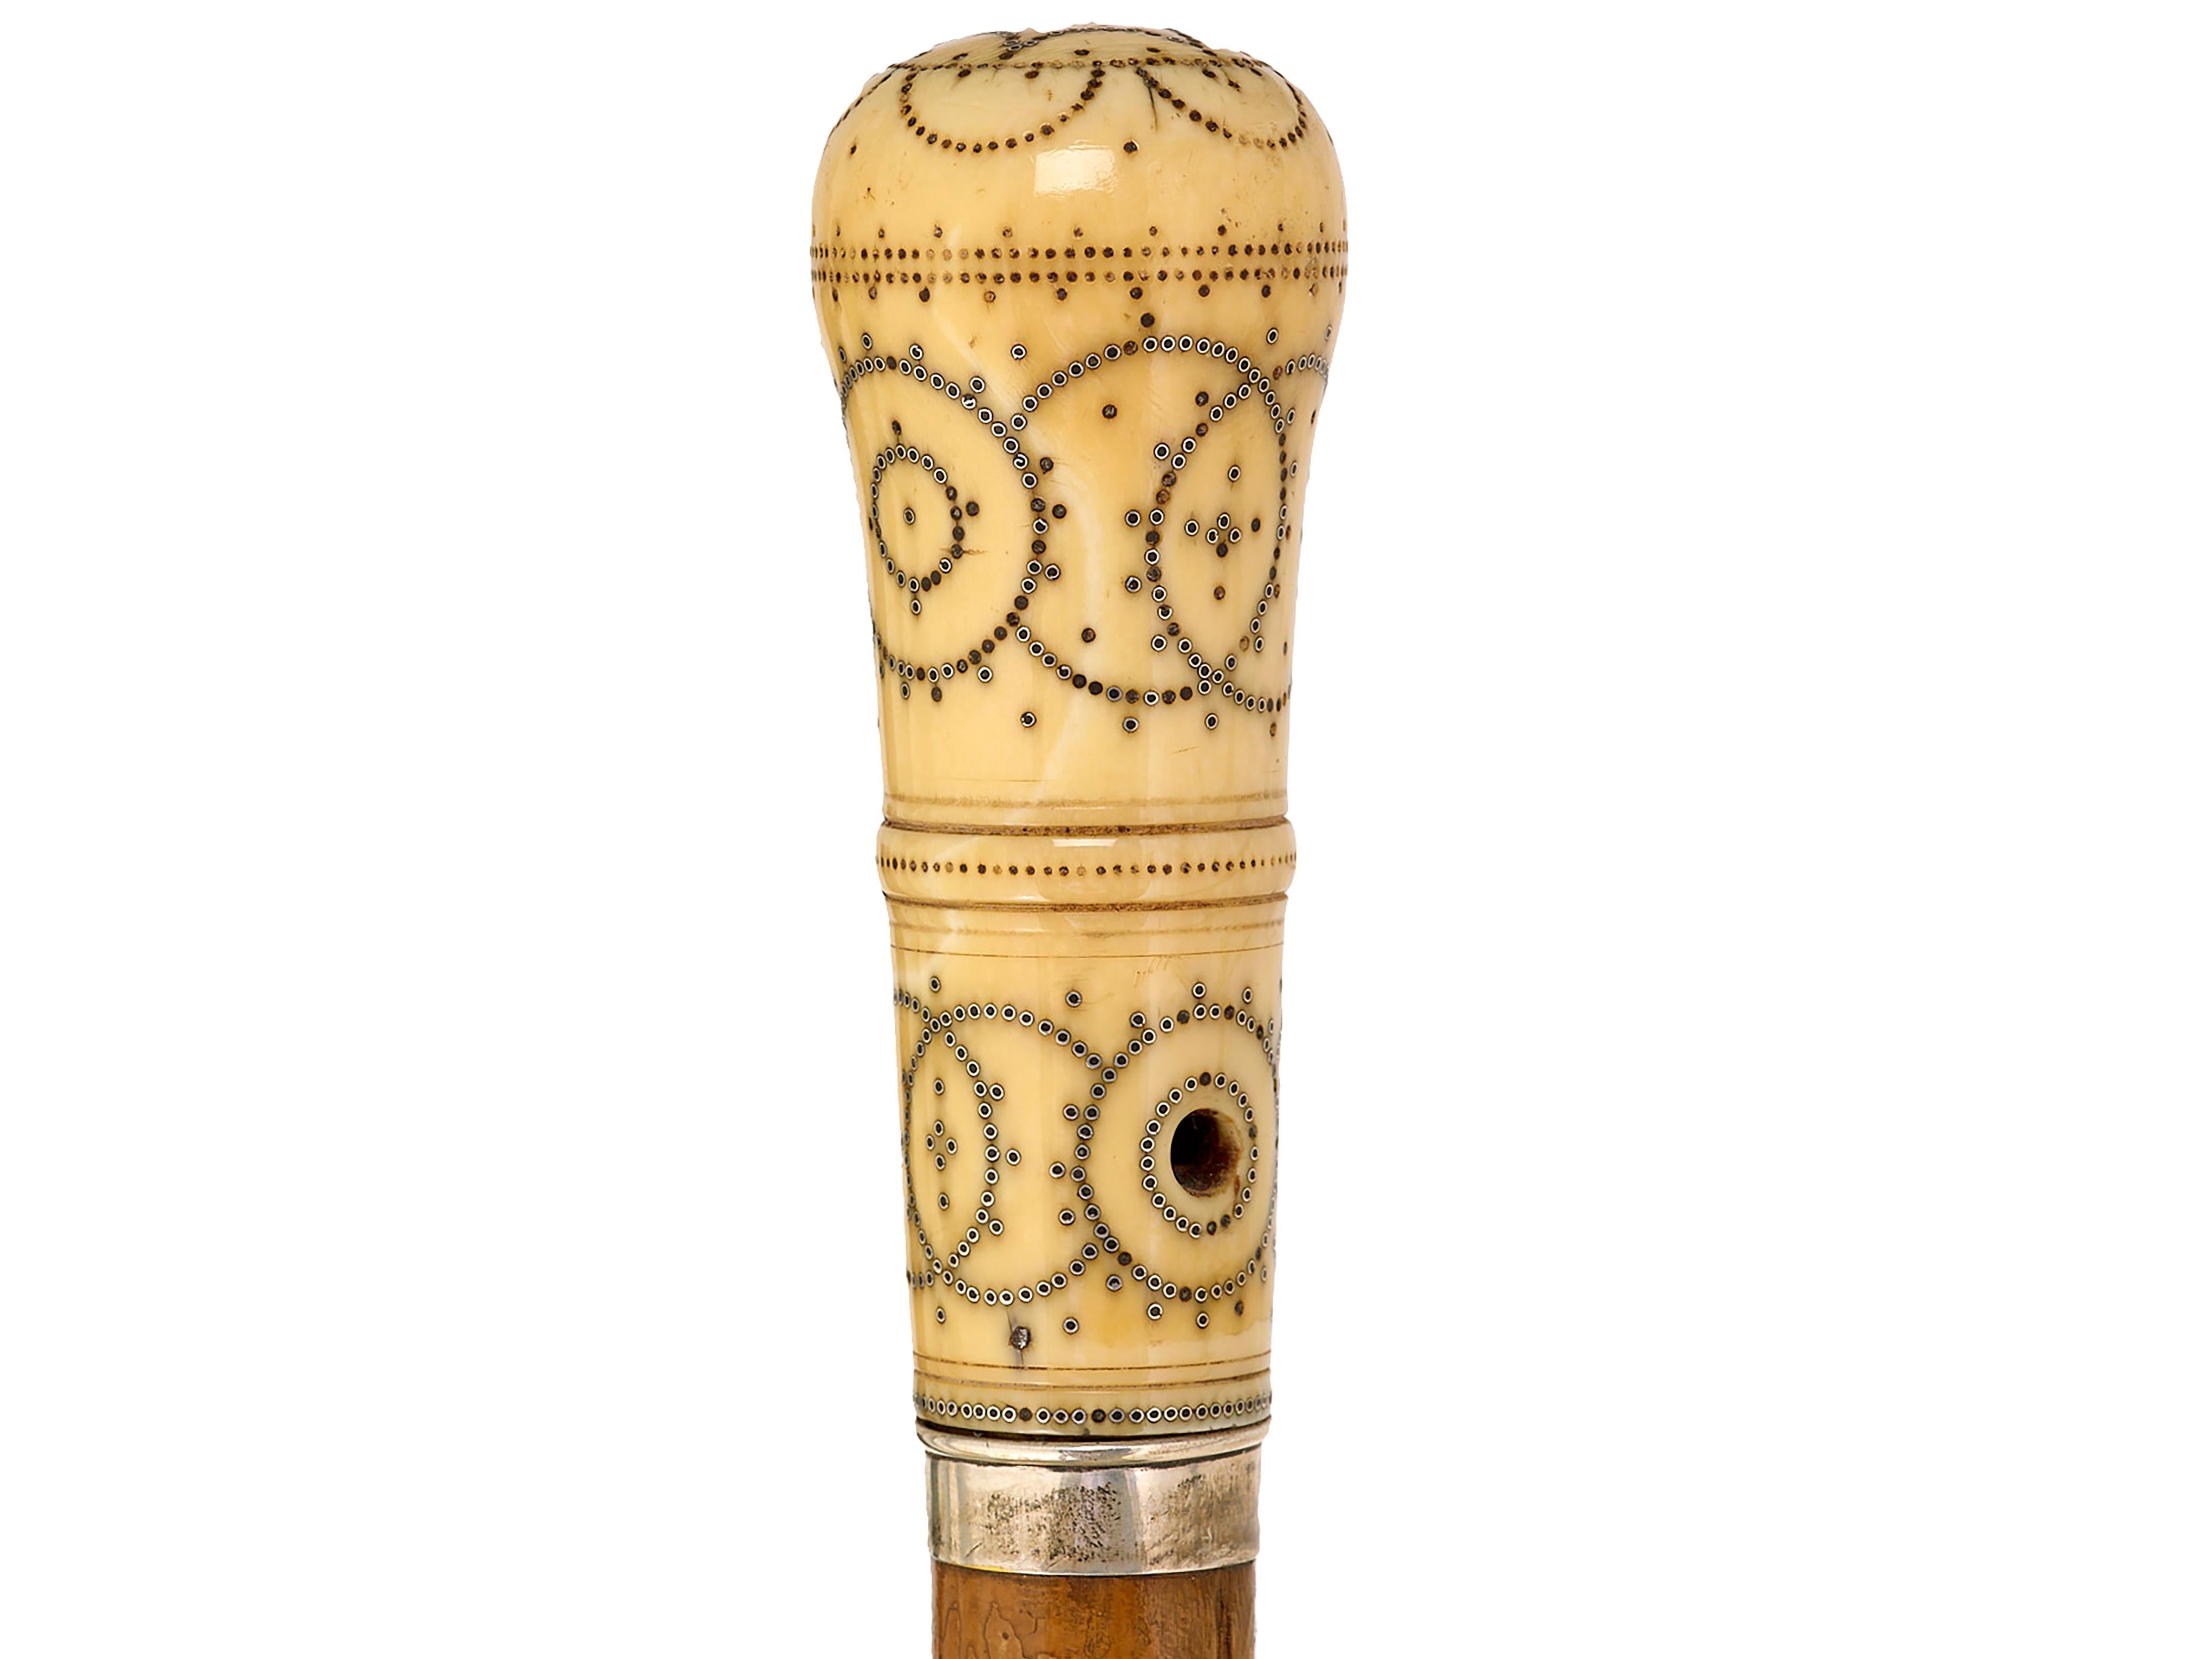 17th century cane